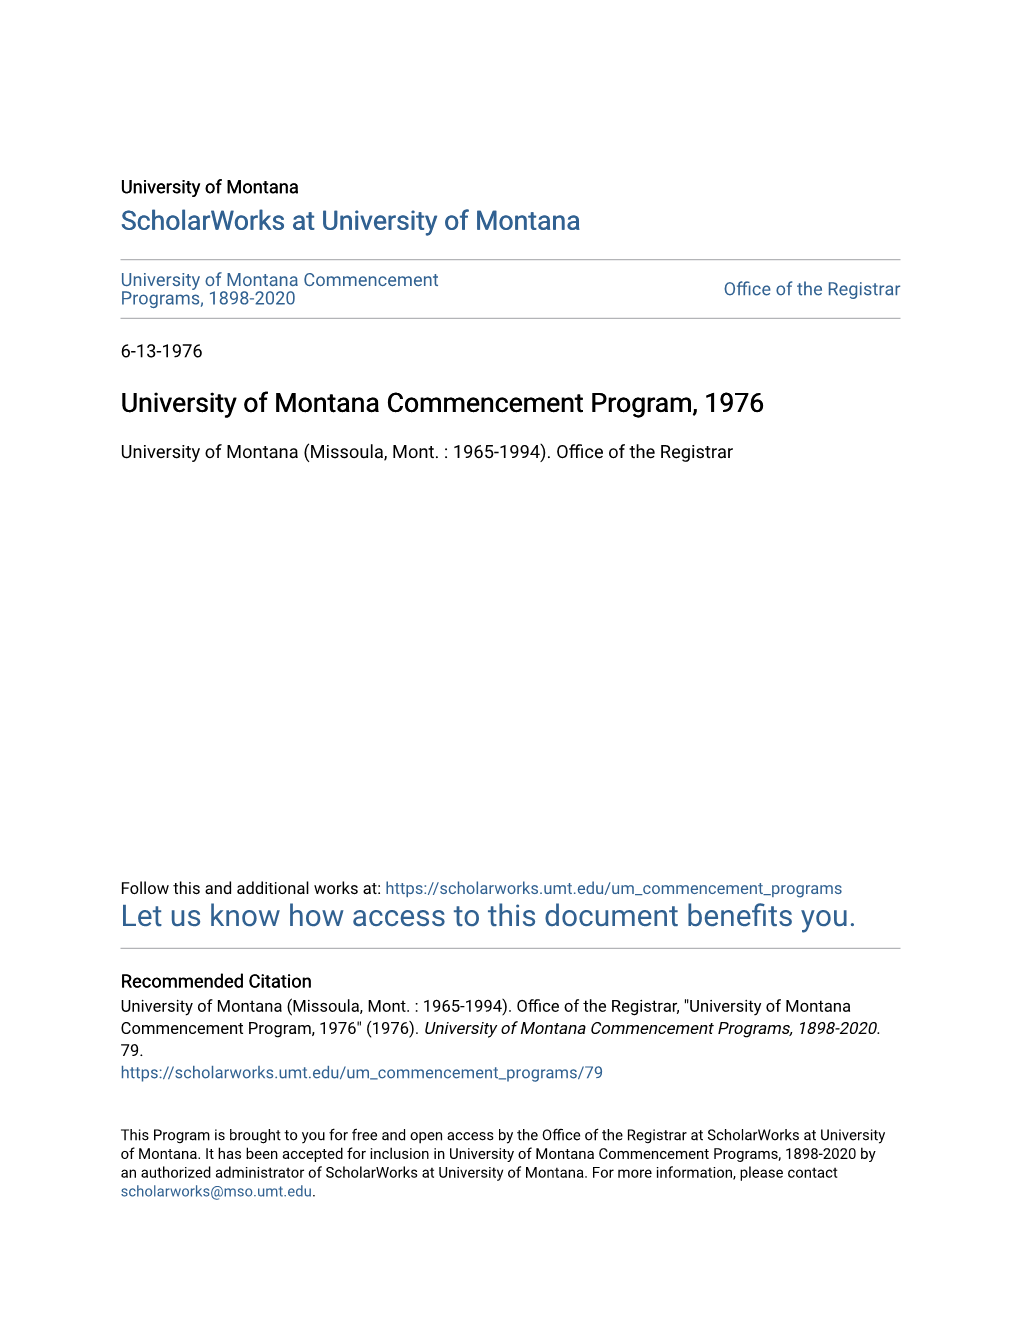 University of Montana Commencement Program, 1976